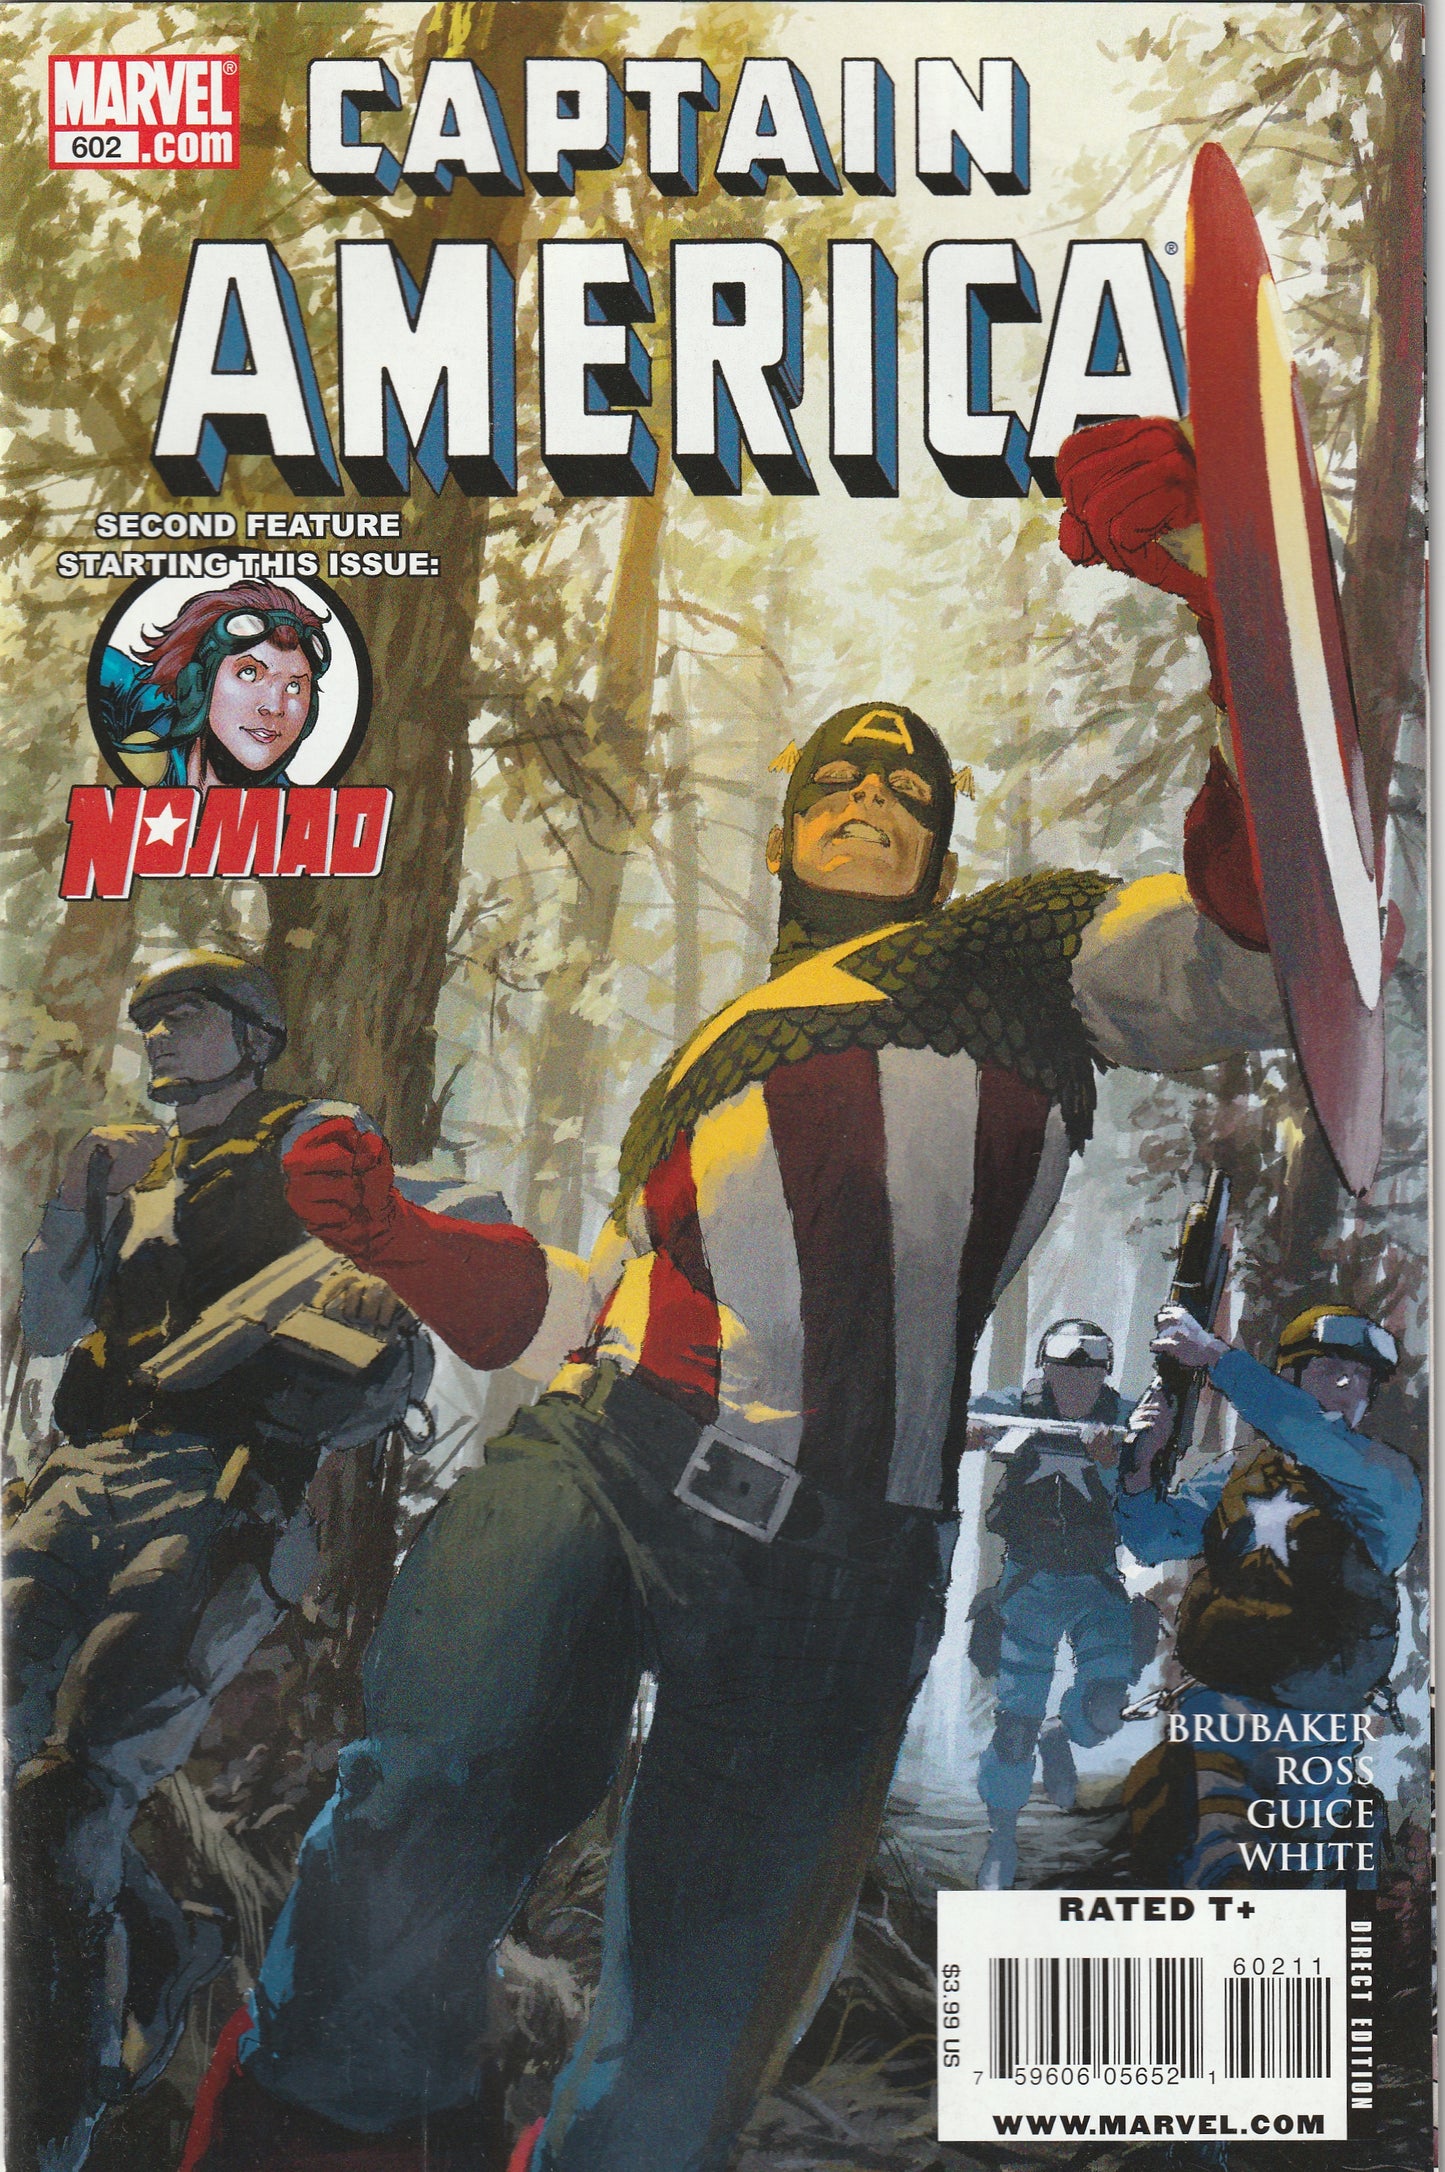 Captain America #602 (2010) - "Tea Bag The Libs" controversial issue